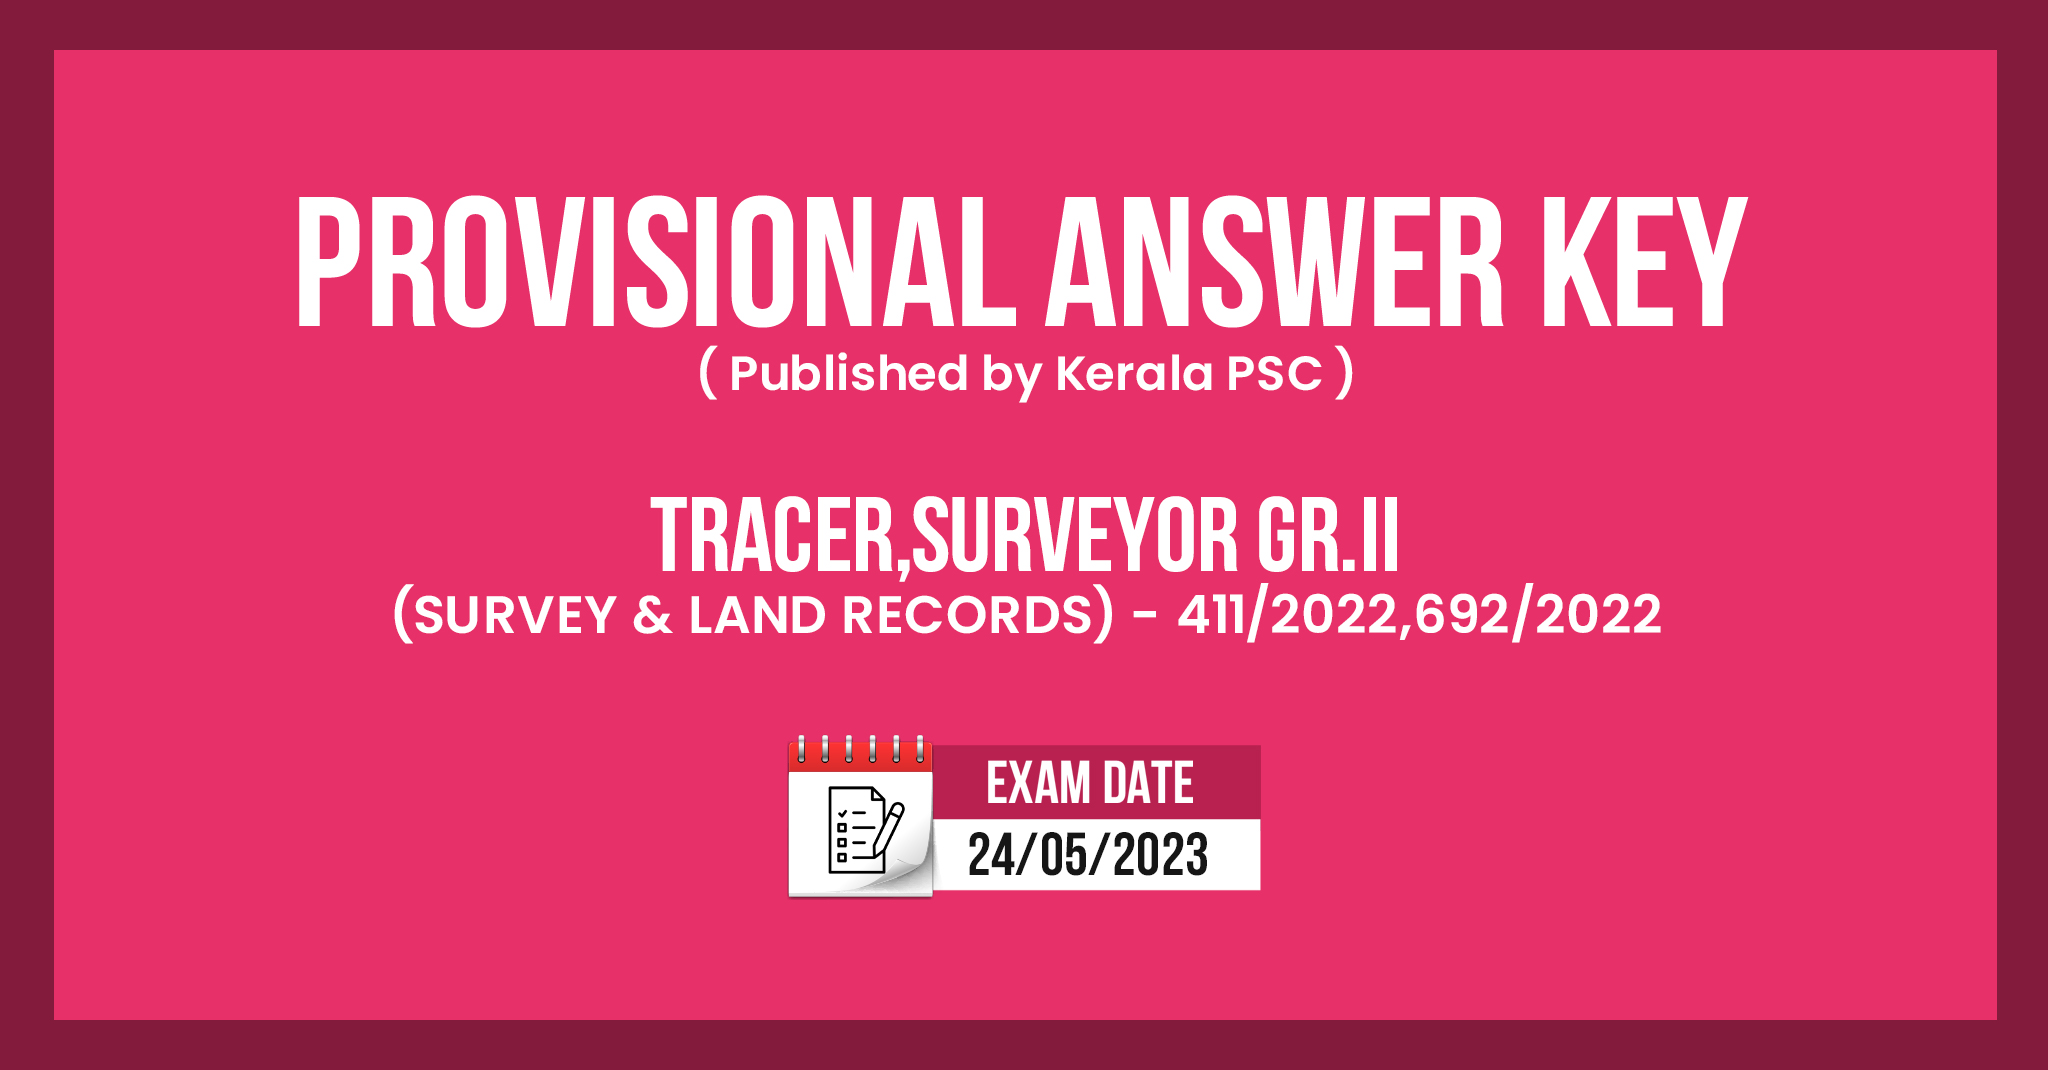 TRACER/SURVEYOR GRADE II PROVISIONAL ANSWER KEY